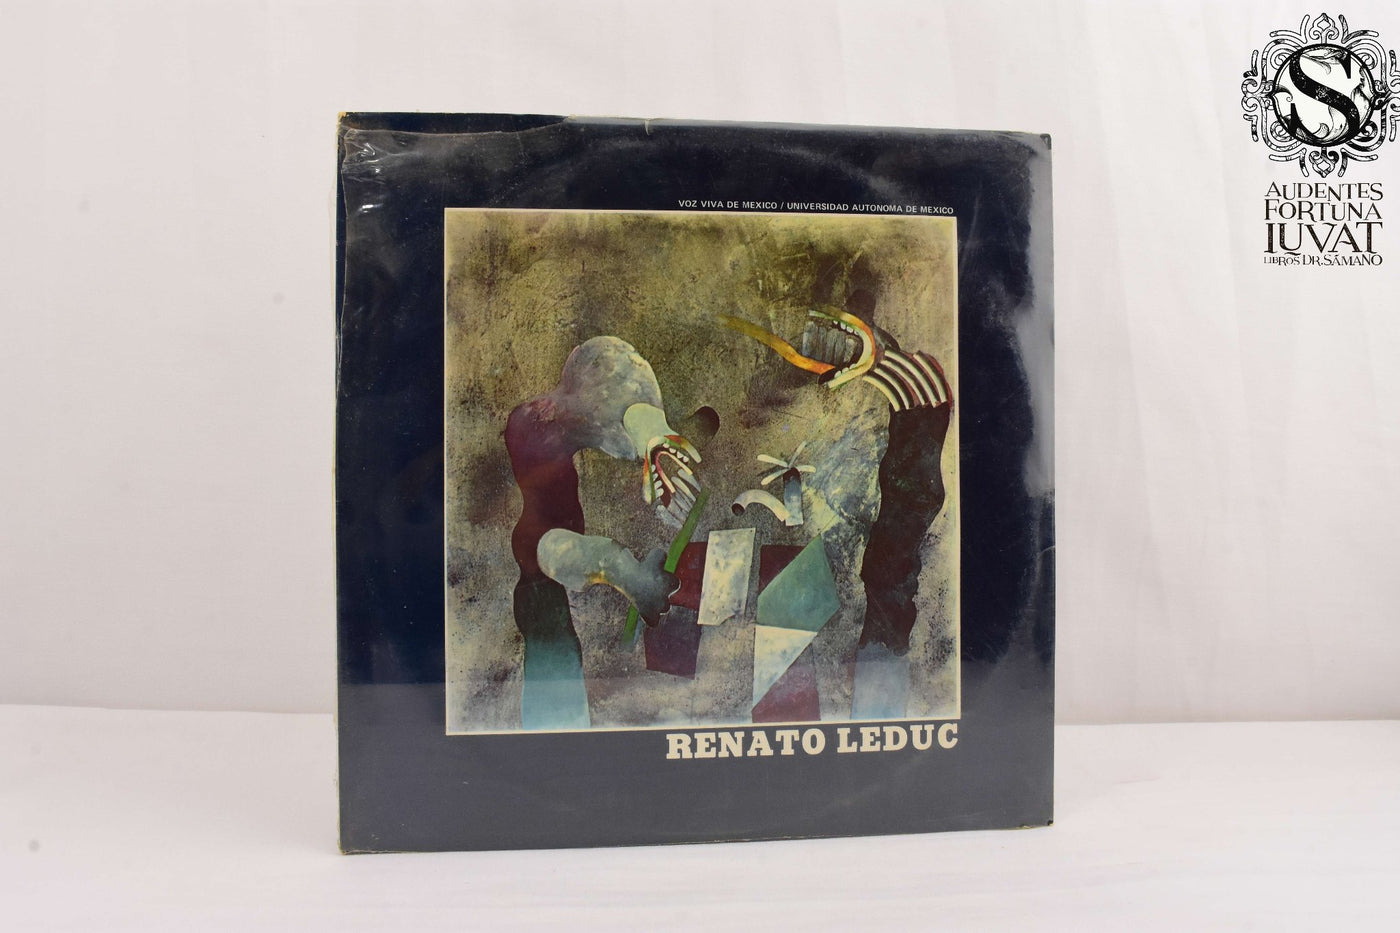 RENATO LEDUC - LP